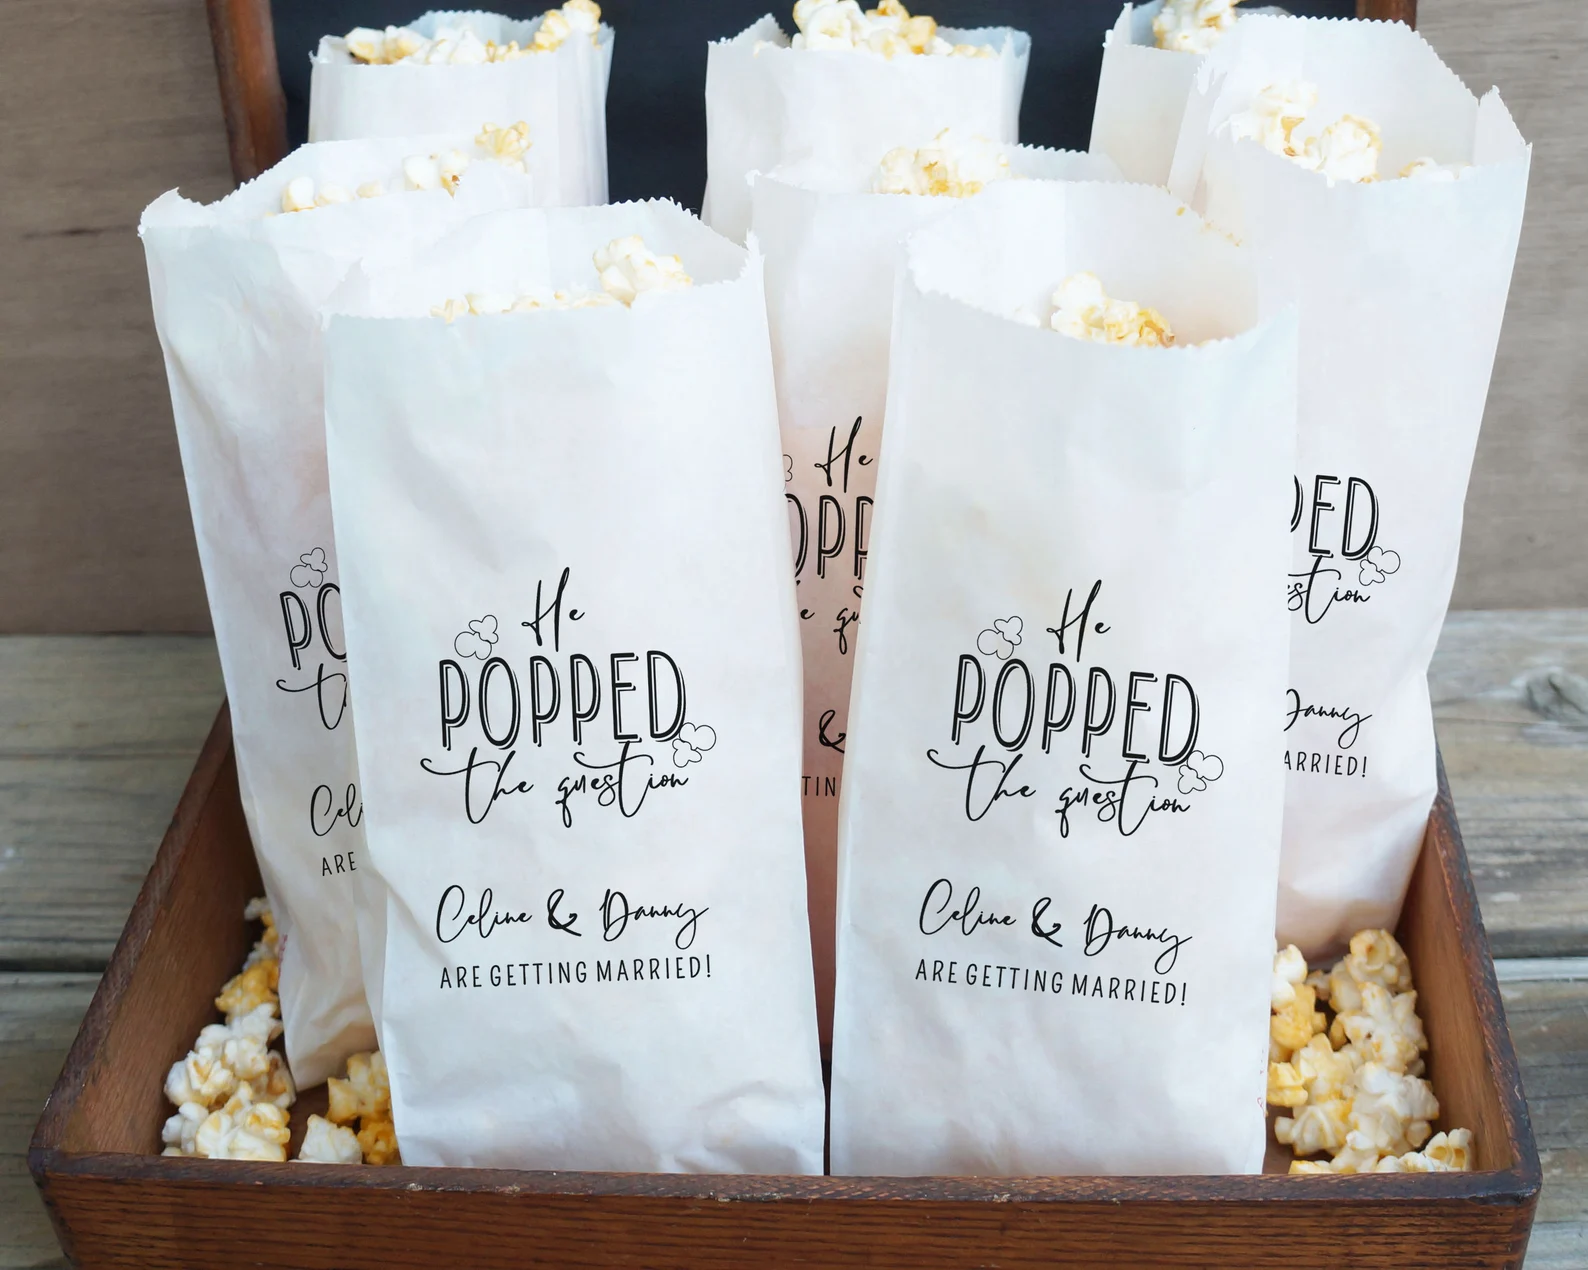 Verlobungsfeier favorisiert Popcorn